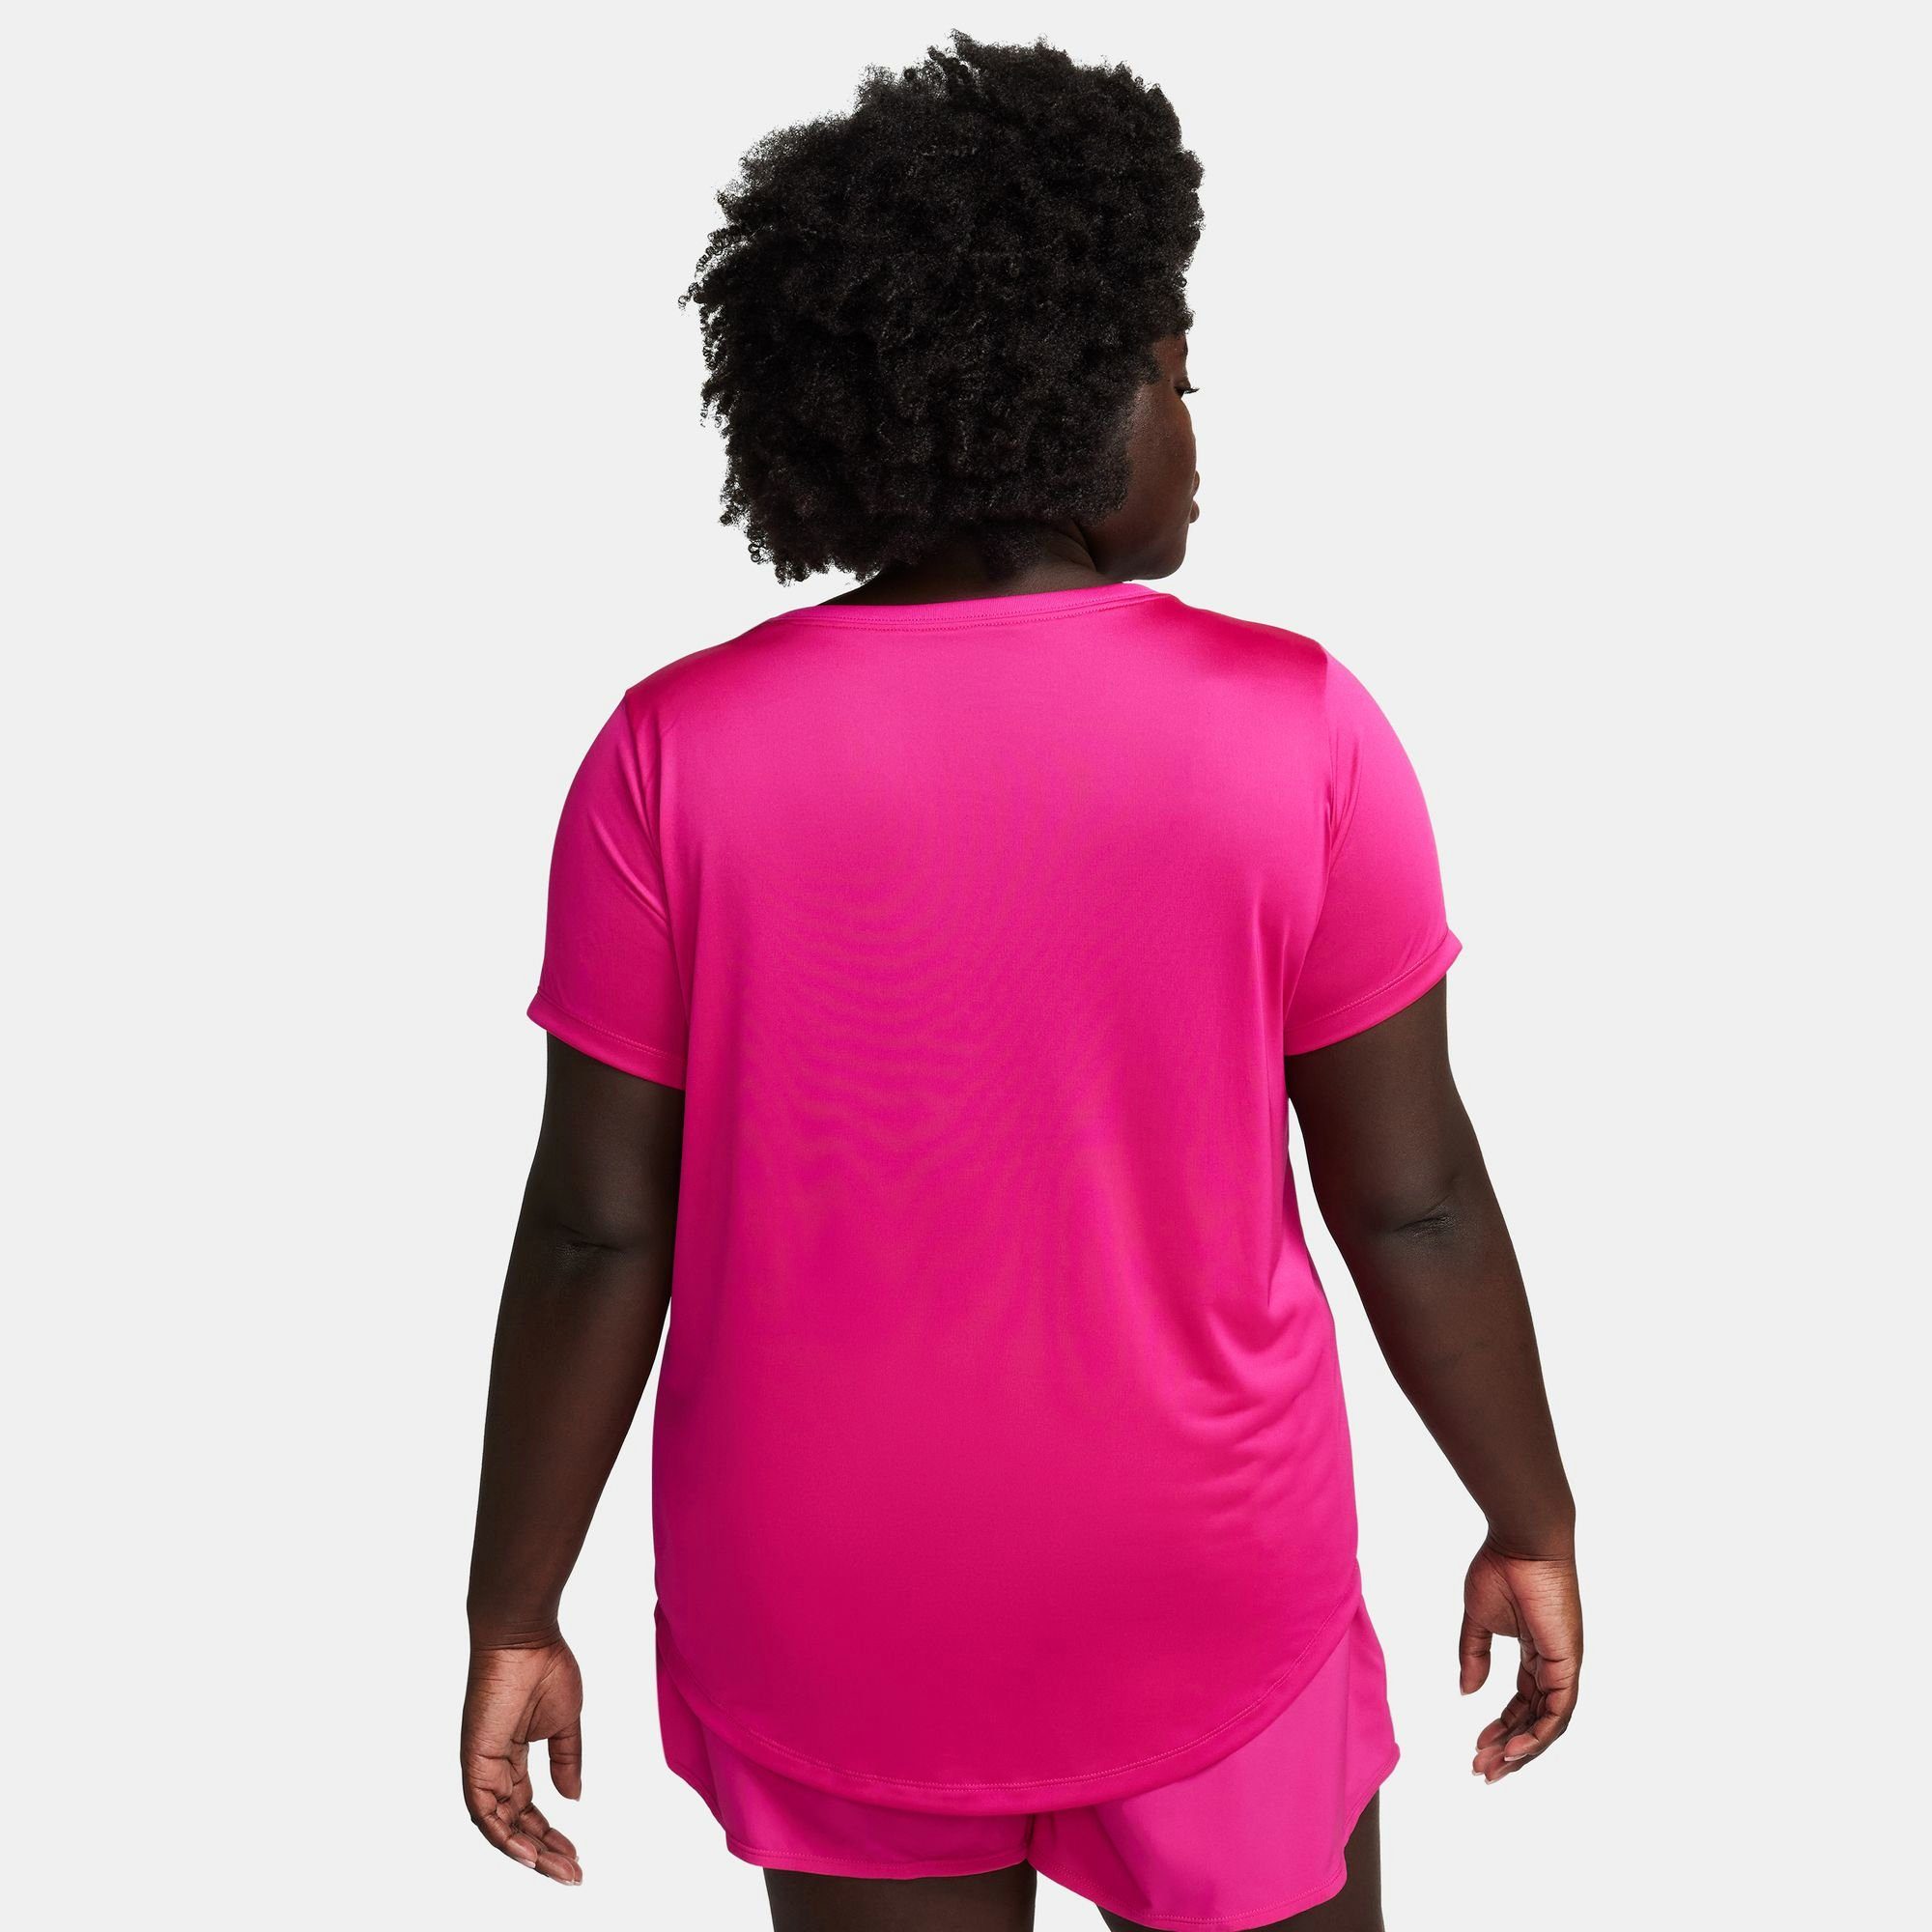 FIREBERRY/WHITE WOMEN'S Nike (PLUS T-SHIRT DRI-FIT SIZE) Trainingsshirt